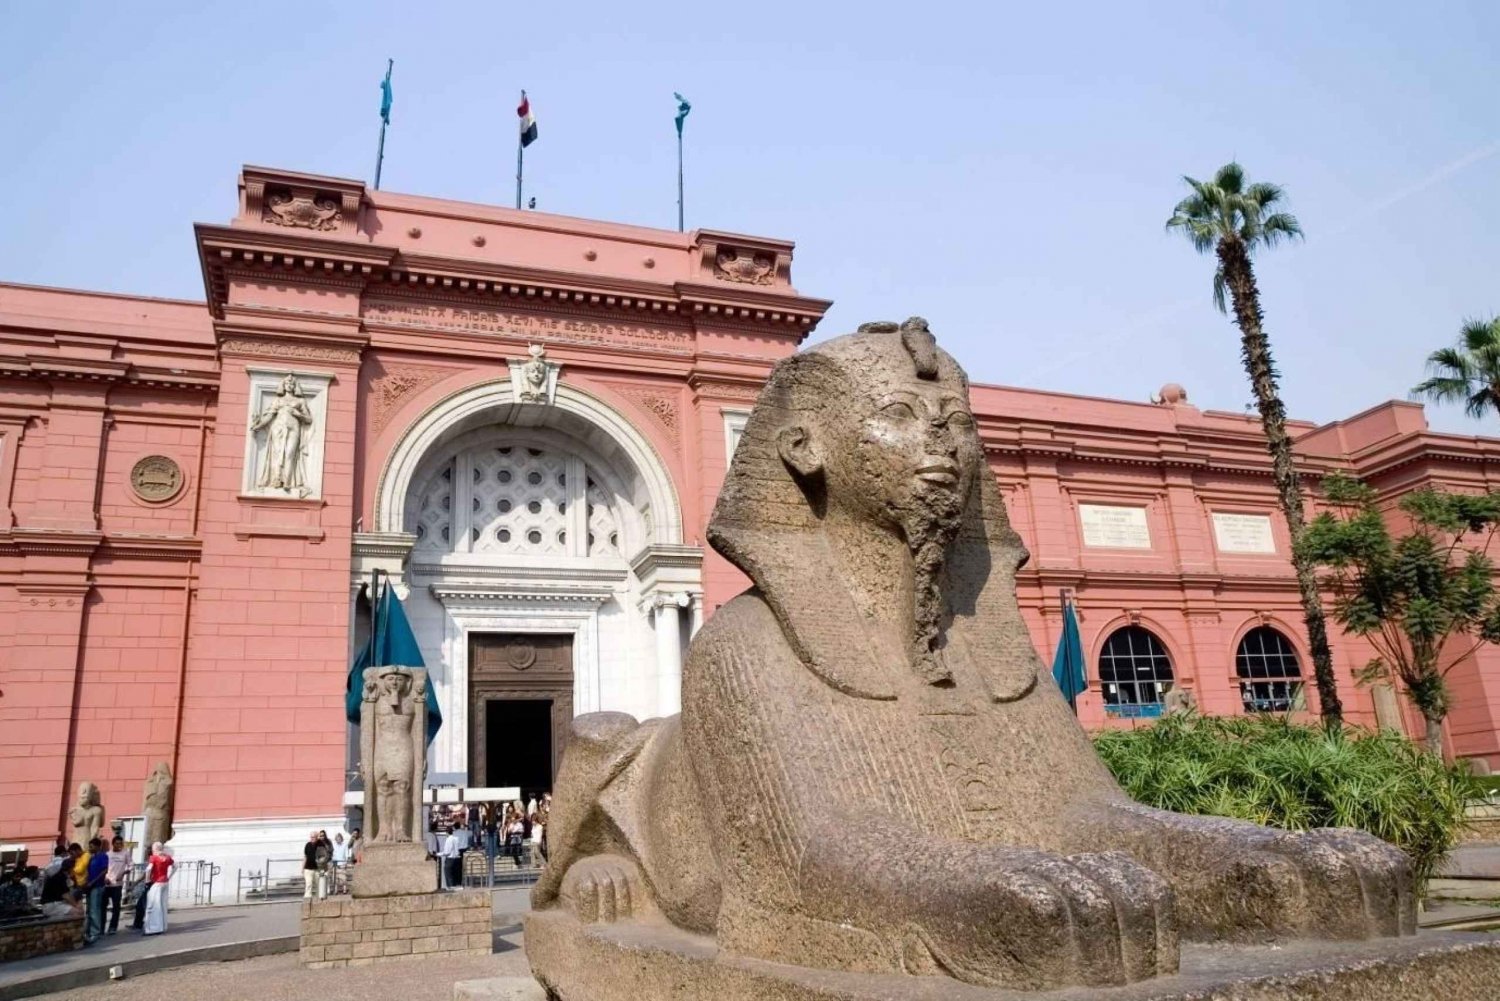 Cairo-tur til det egyptiske museum, citadellet og Khan Khalili-basaren